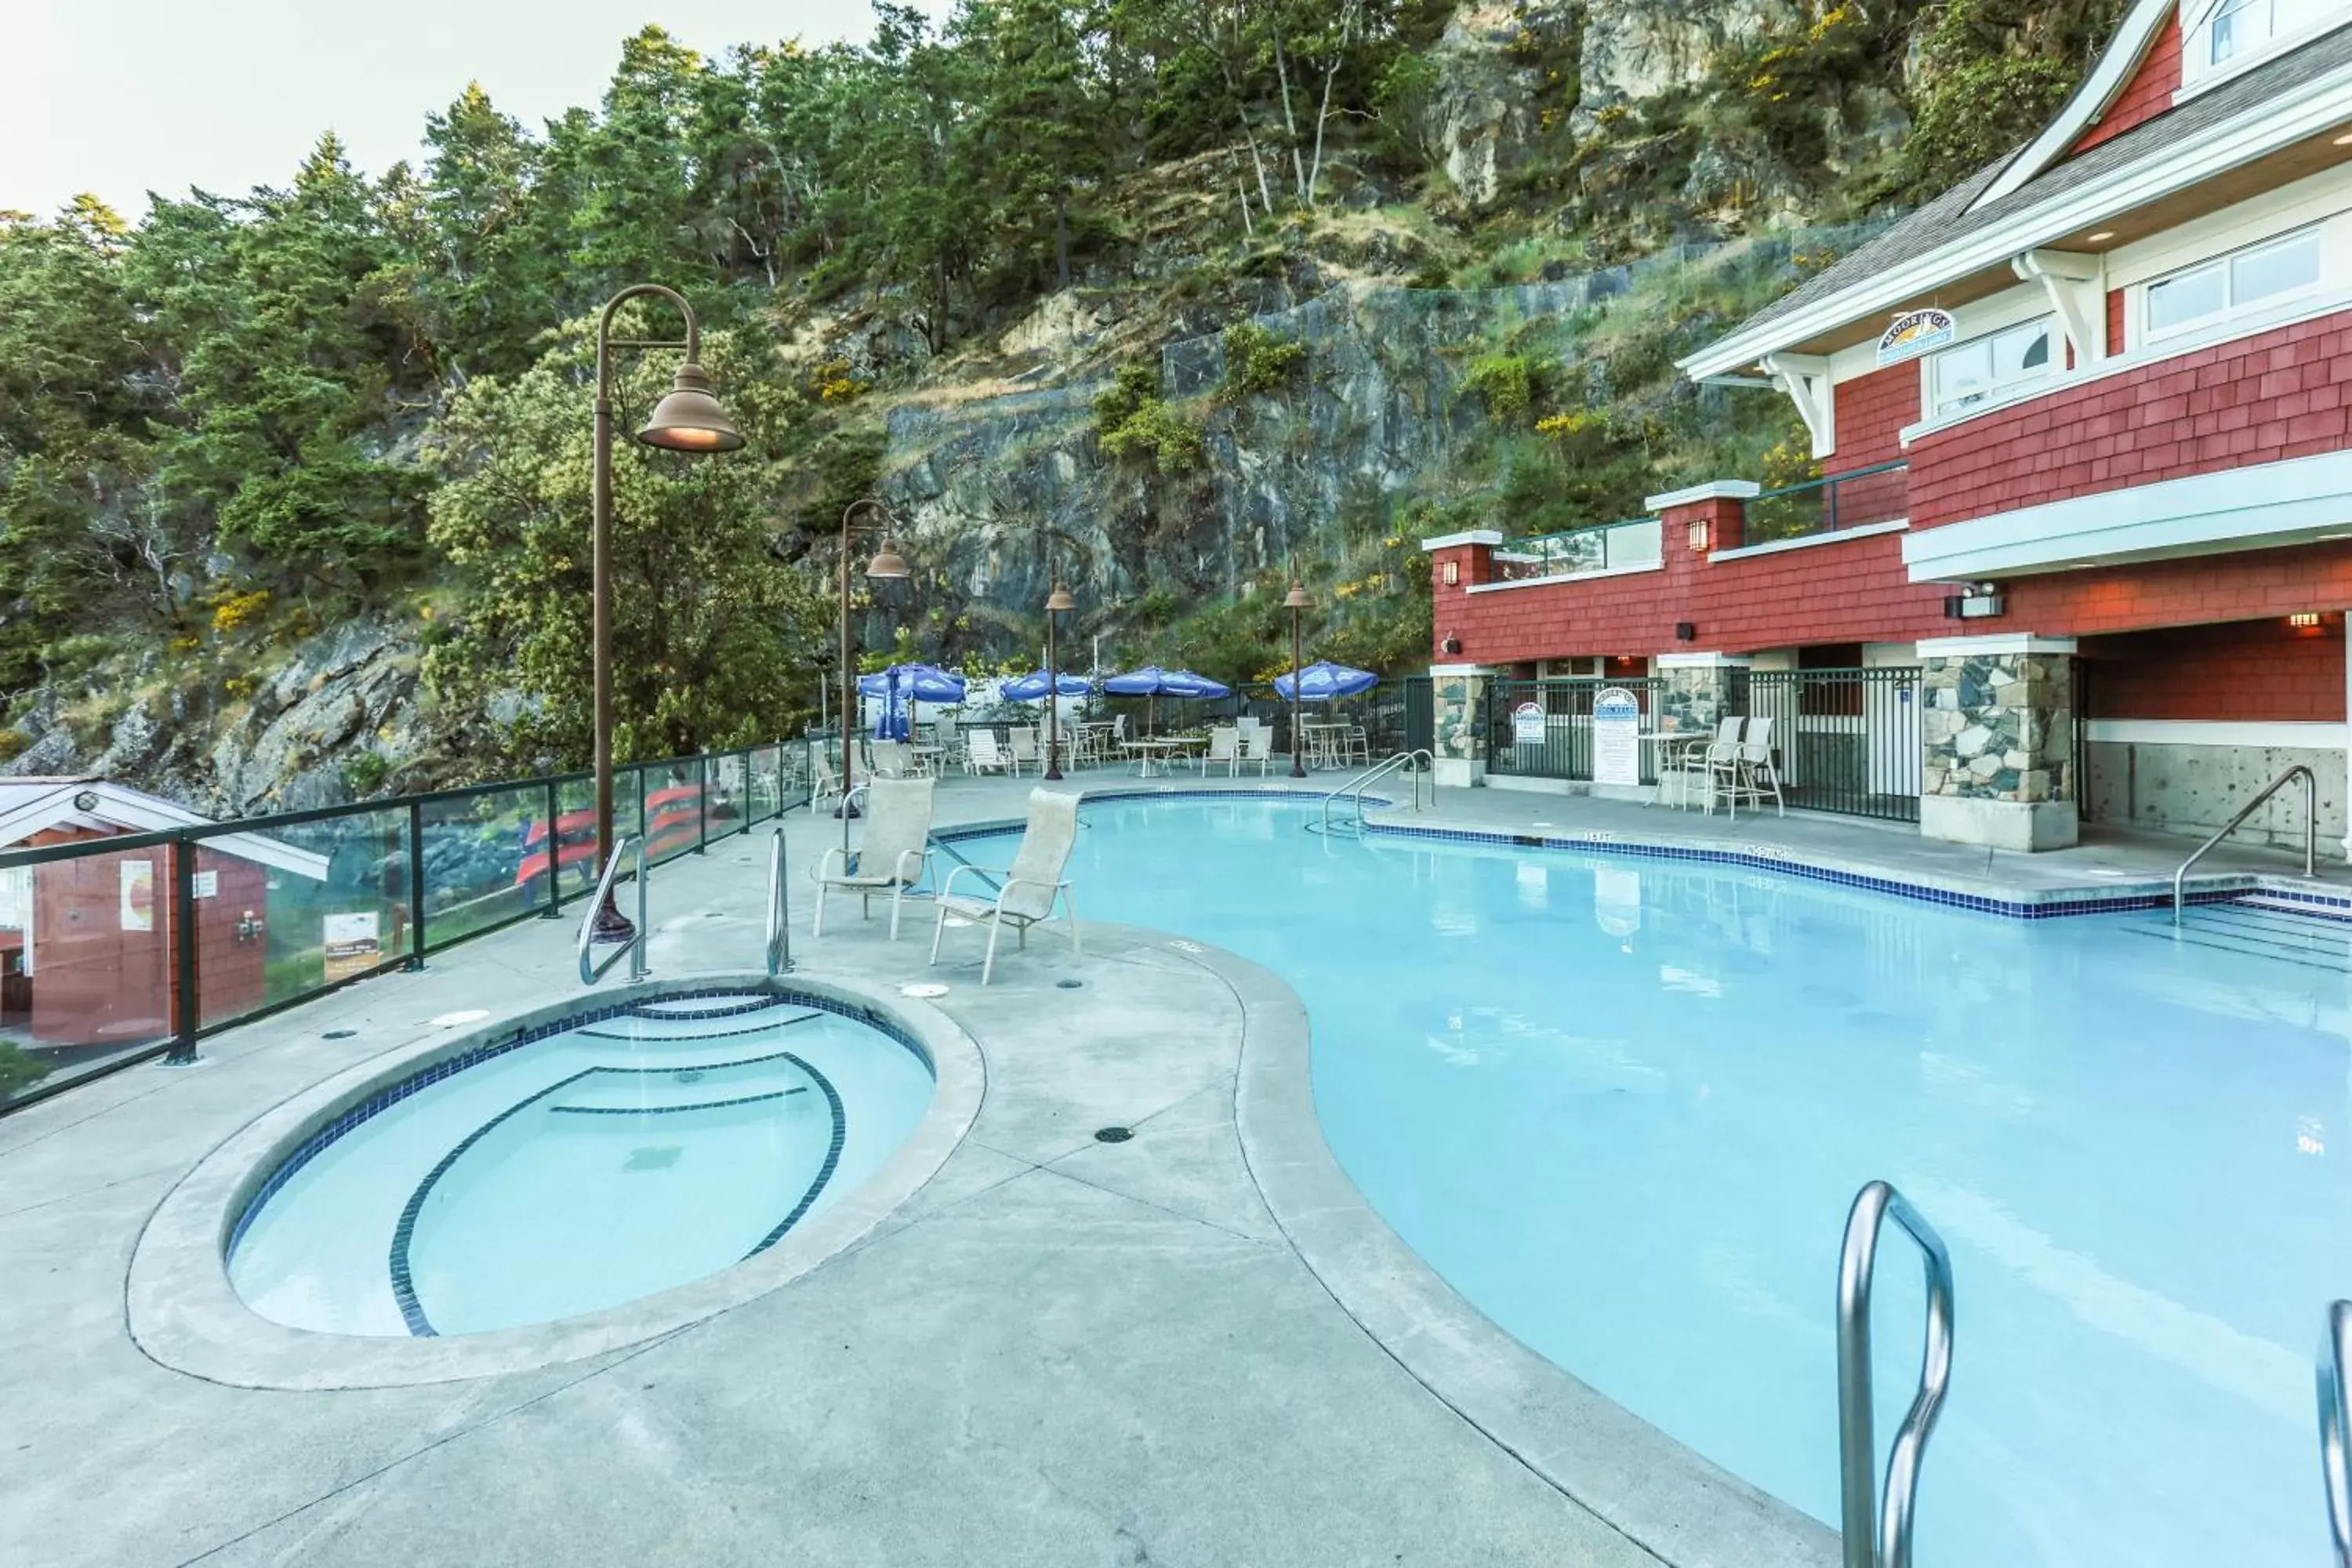 Swimming Pool in Poets Cove Resort & Spa